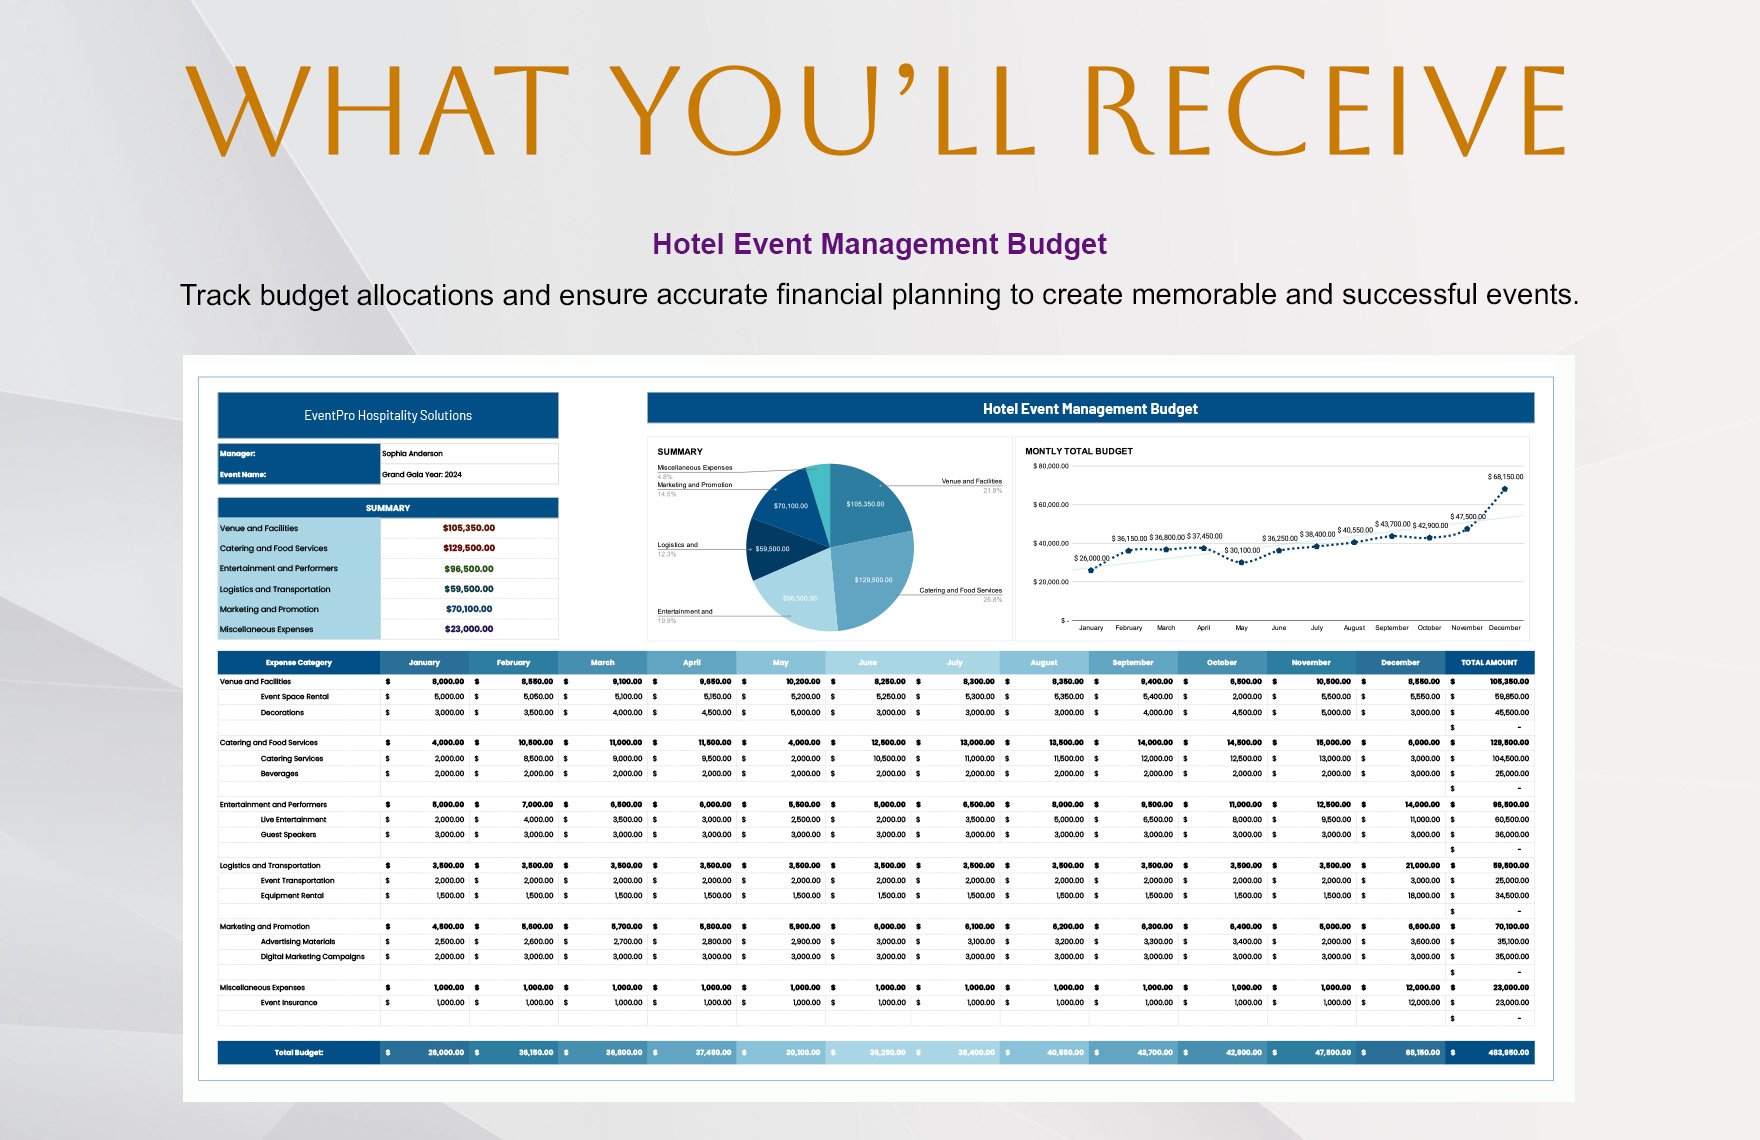 Hotel Event Management Budget Template